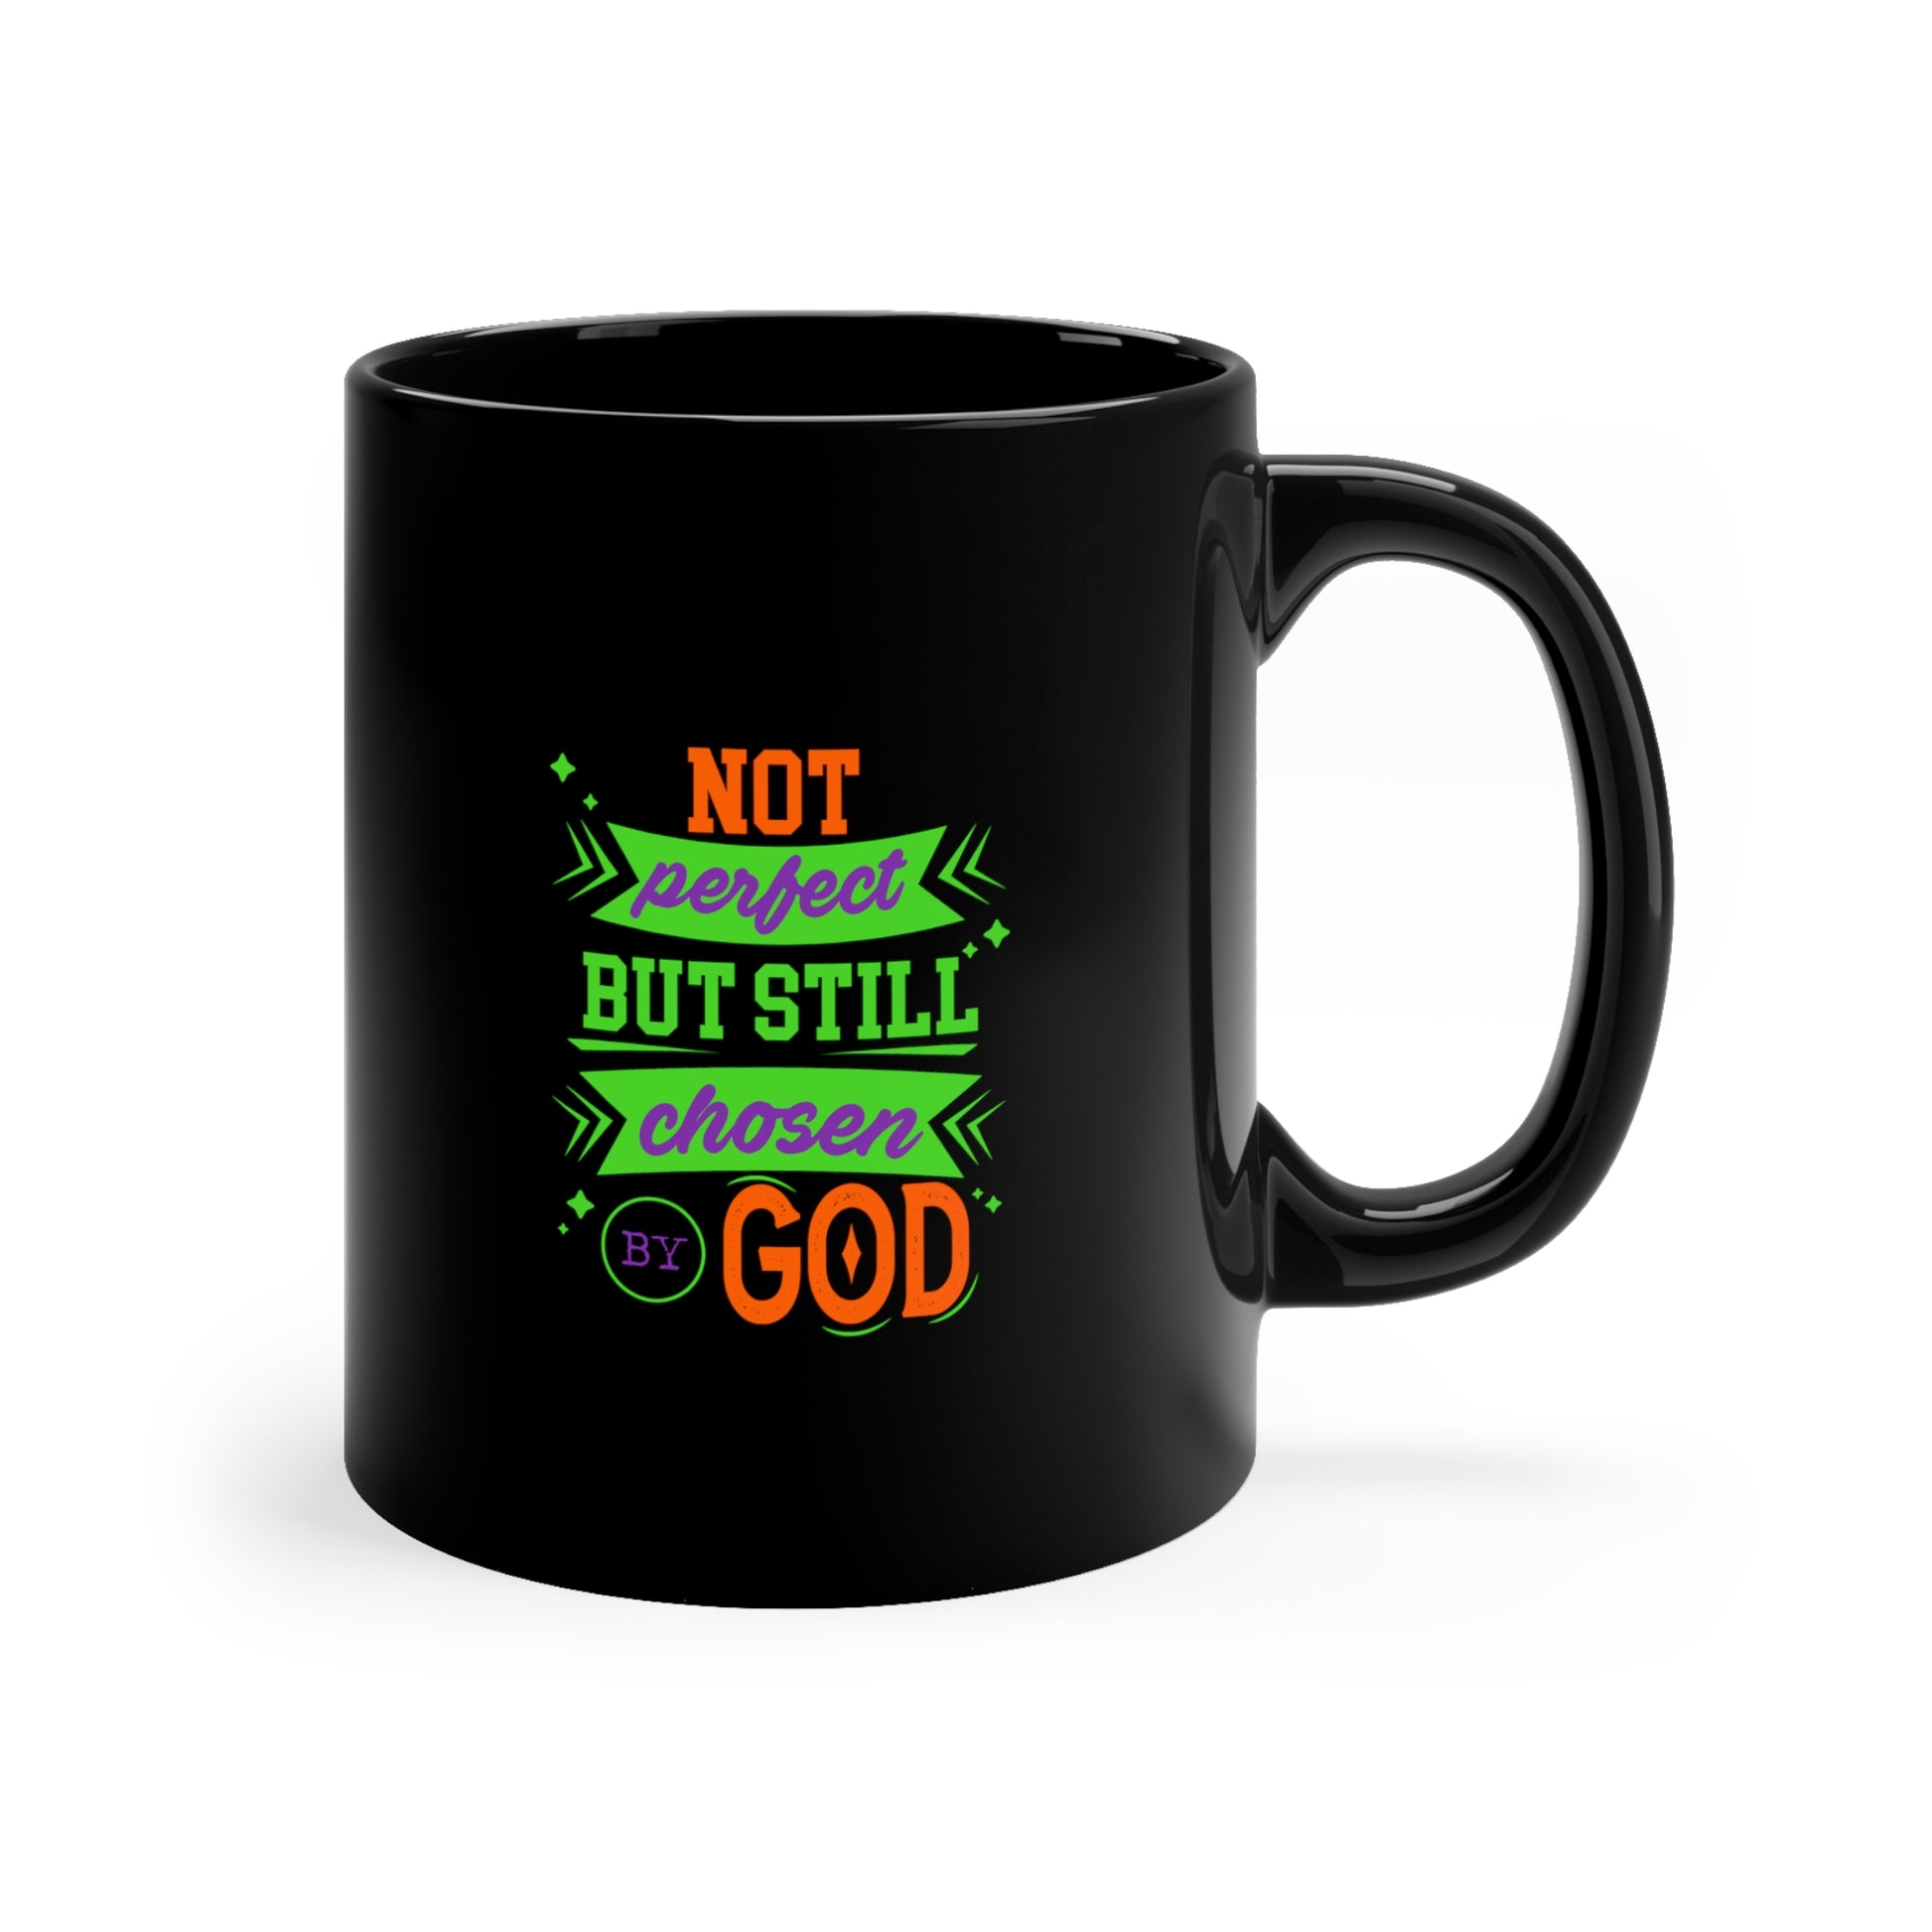 Not Perfect But Still Chosen By God Christian Black Ceramic Mug 11oz (double sided print) Printify